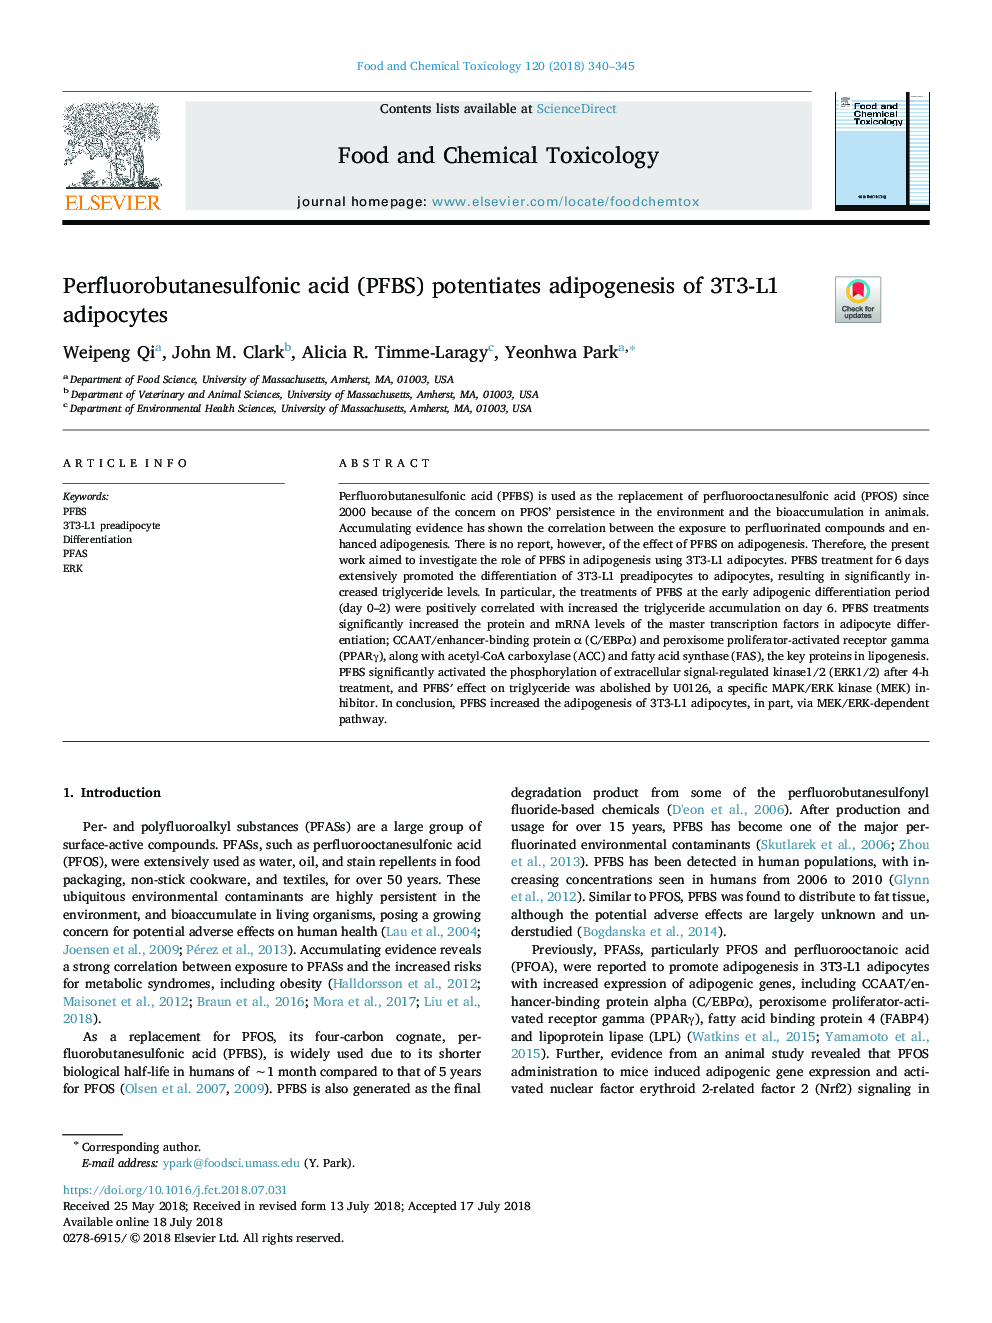 Perfluorobutanesulfonic acid (PFBS) potentiates adipogenesis of 3T3-L1 adipocytes